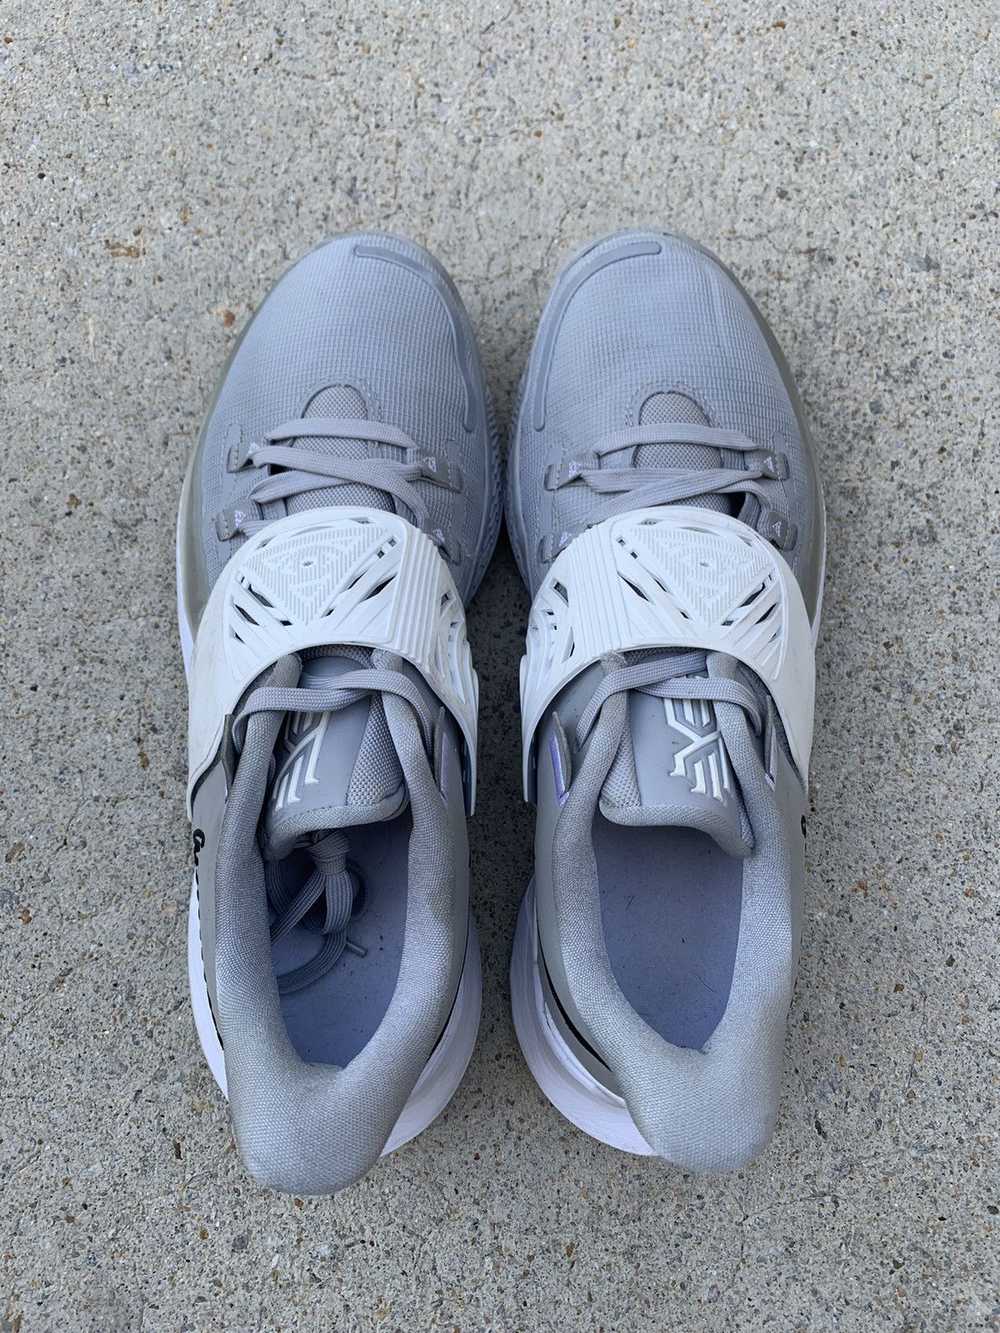 Nike Nike Kyrie Low 3 Flat Silver Black White - image 6